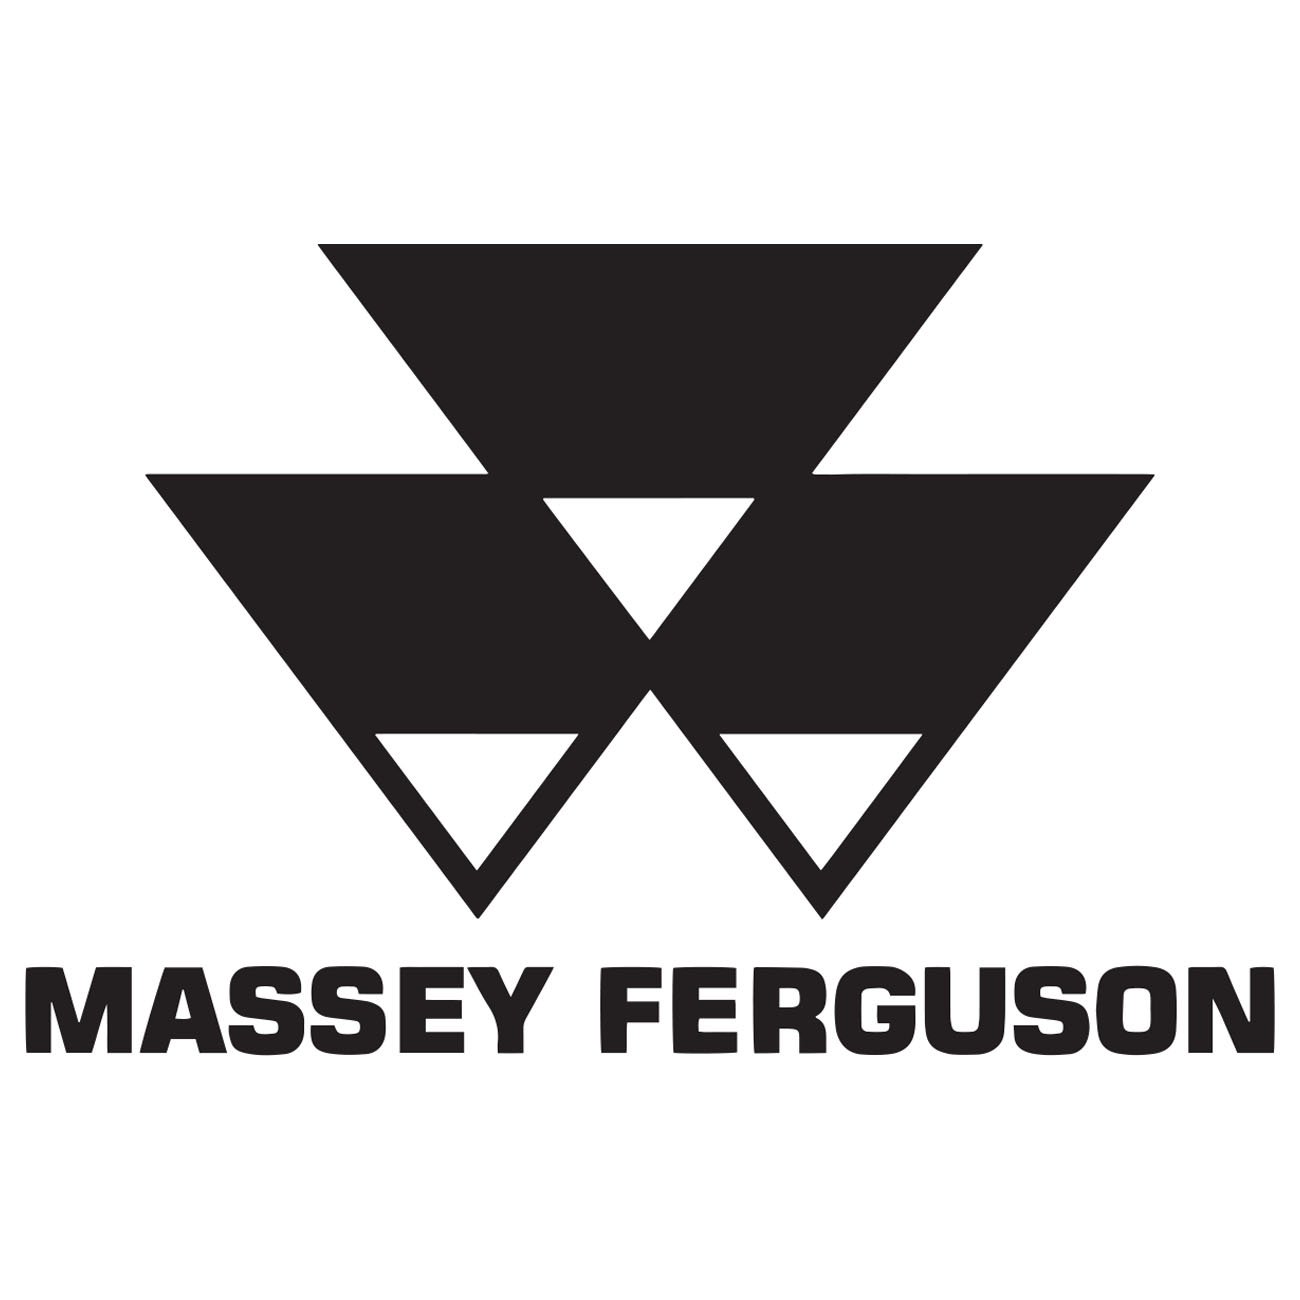 Massey Ferguson logo 3